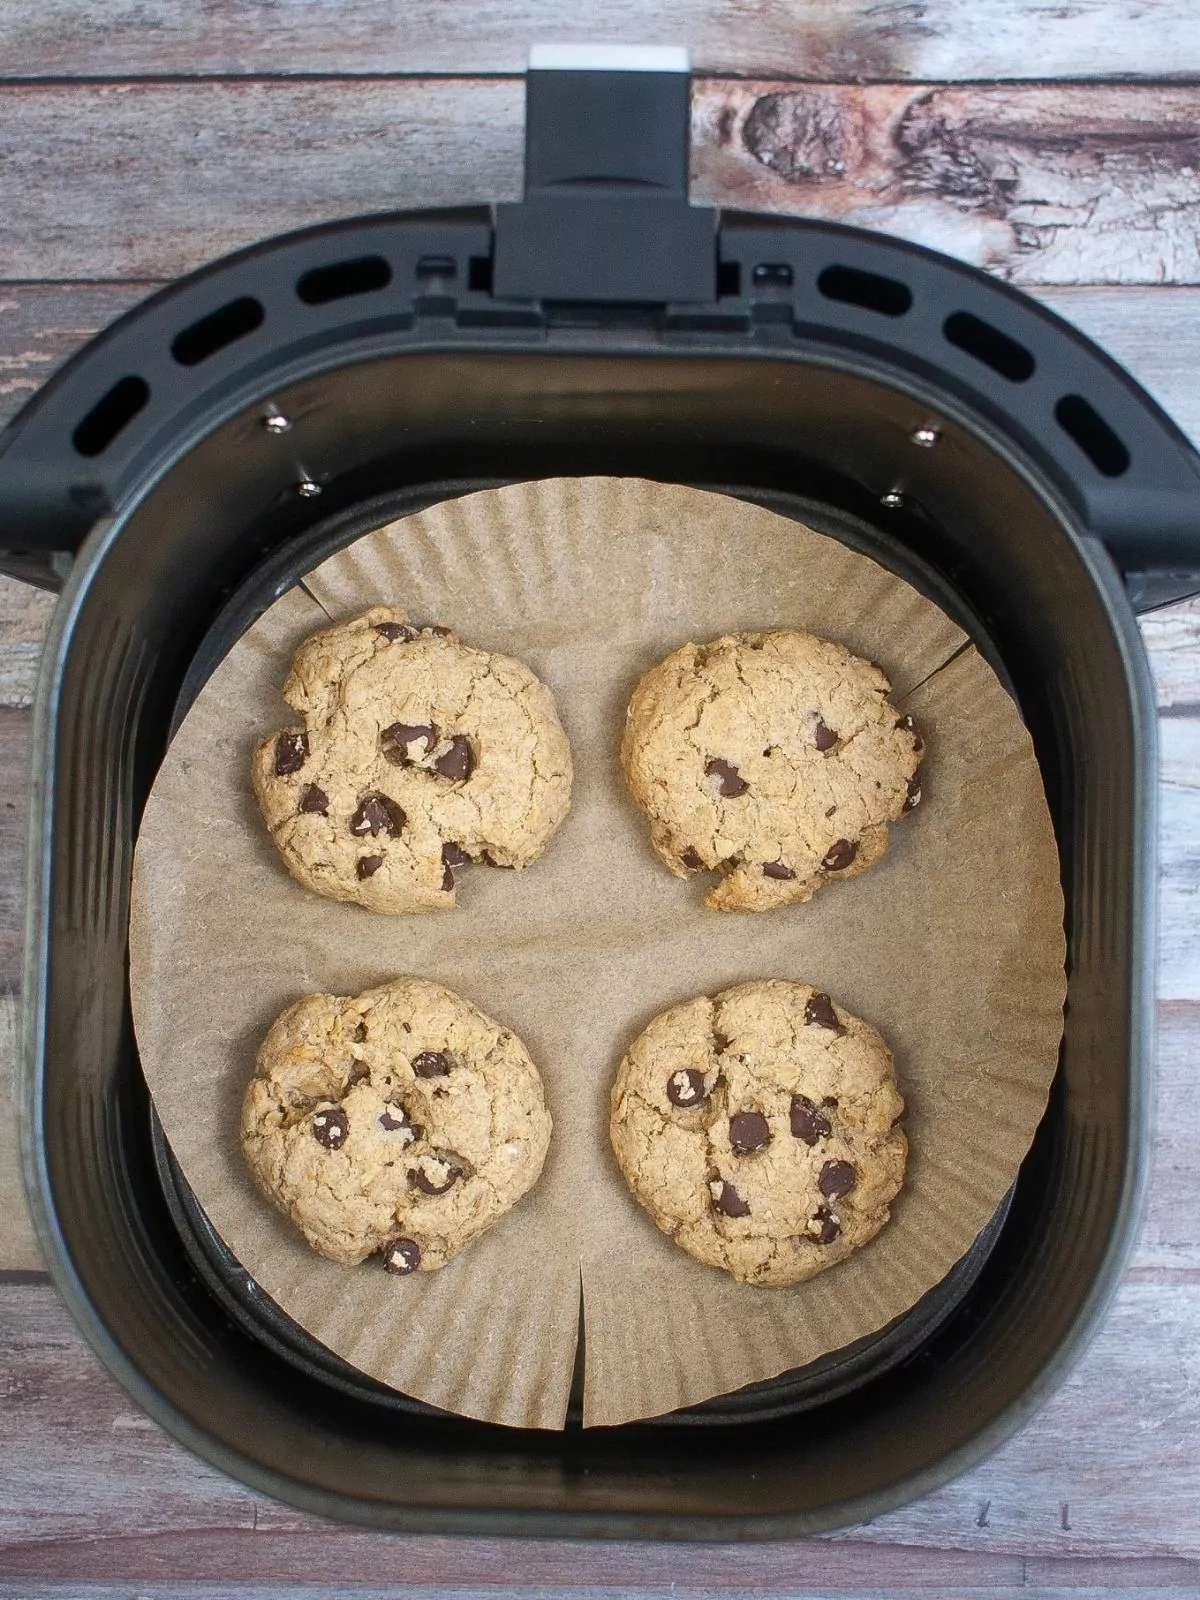 chocolate chip cookies baked in air fryer.